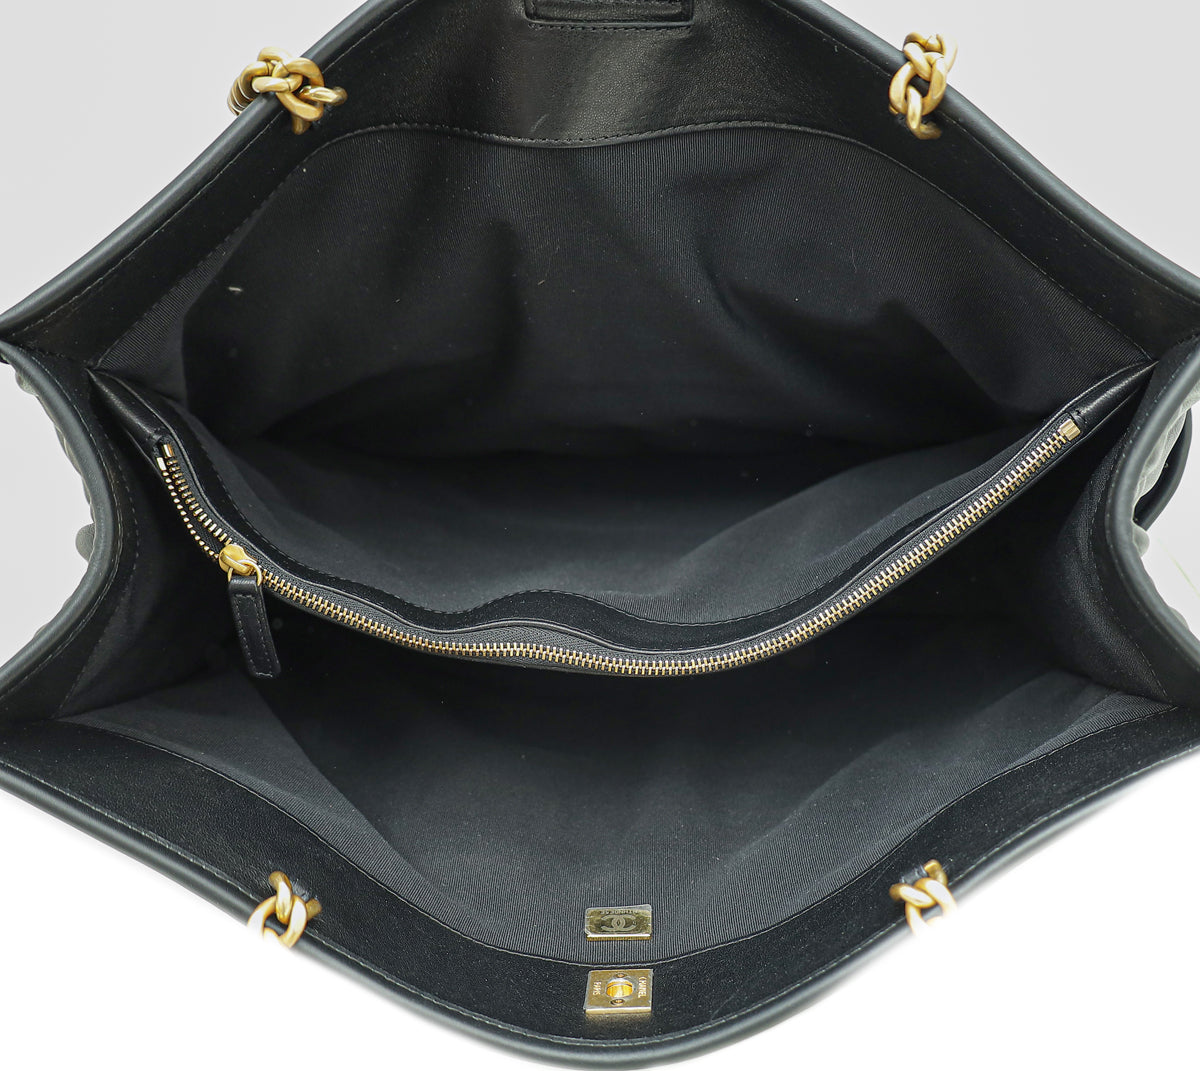 Chanel Black CC Multi Pockets Large Tote Bag